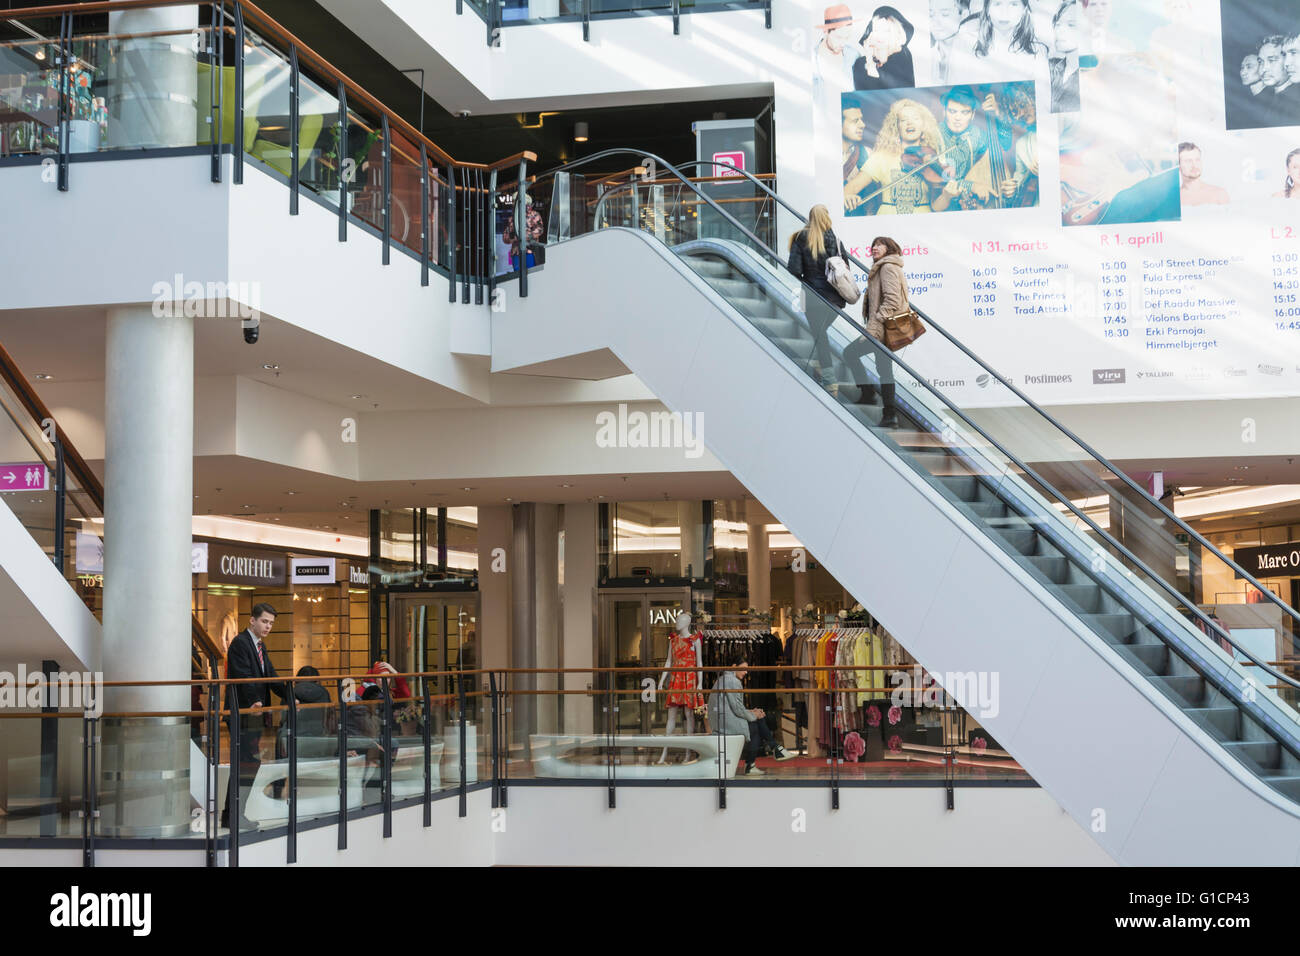 Viru keskus shopping mall in Tallinn Estonia Stock Photo